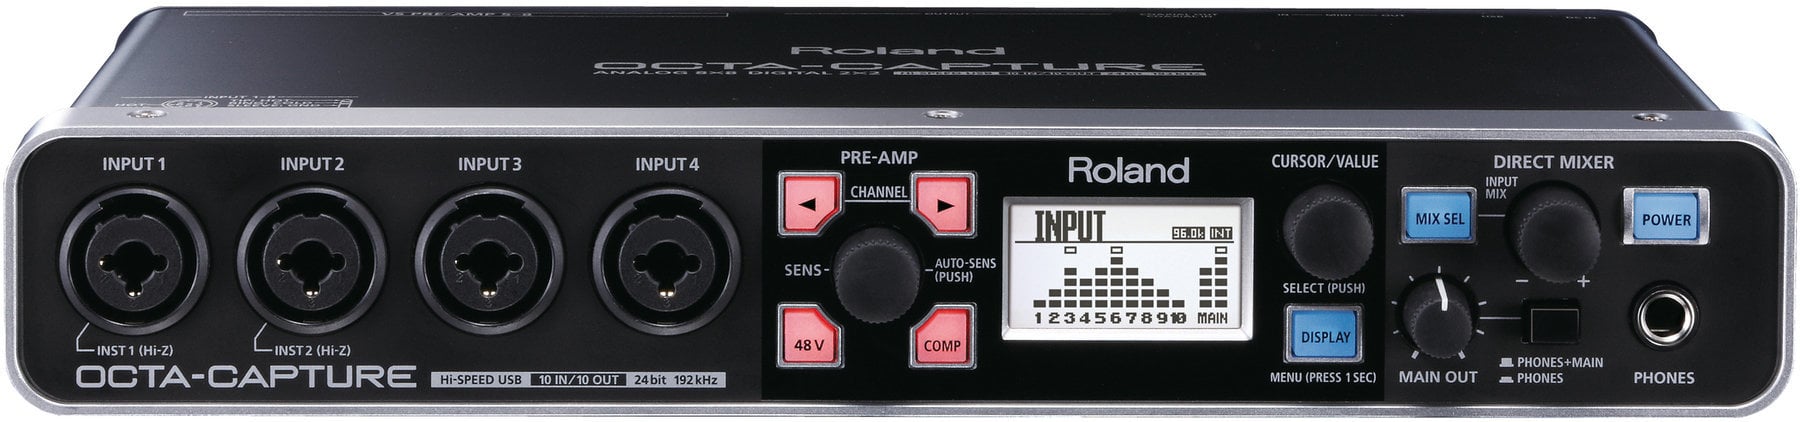 USB Audio Interface Roland UA-1010 Octa Capture